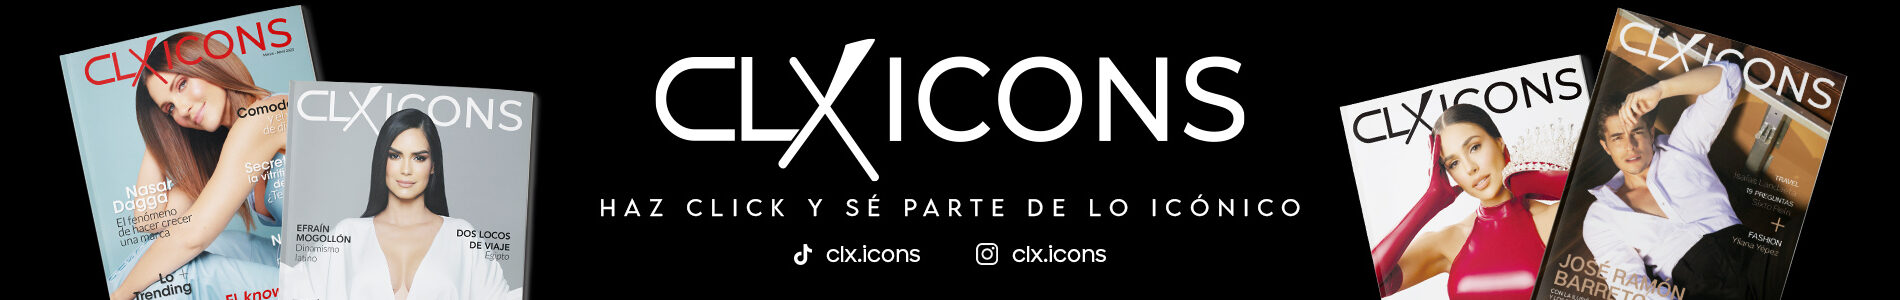 Clx Icons